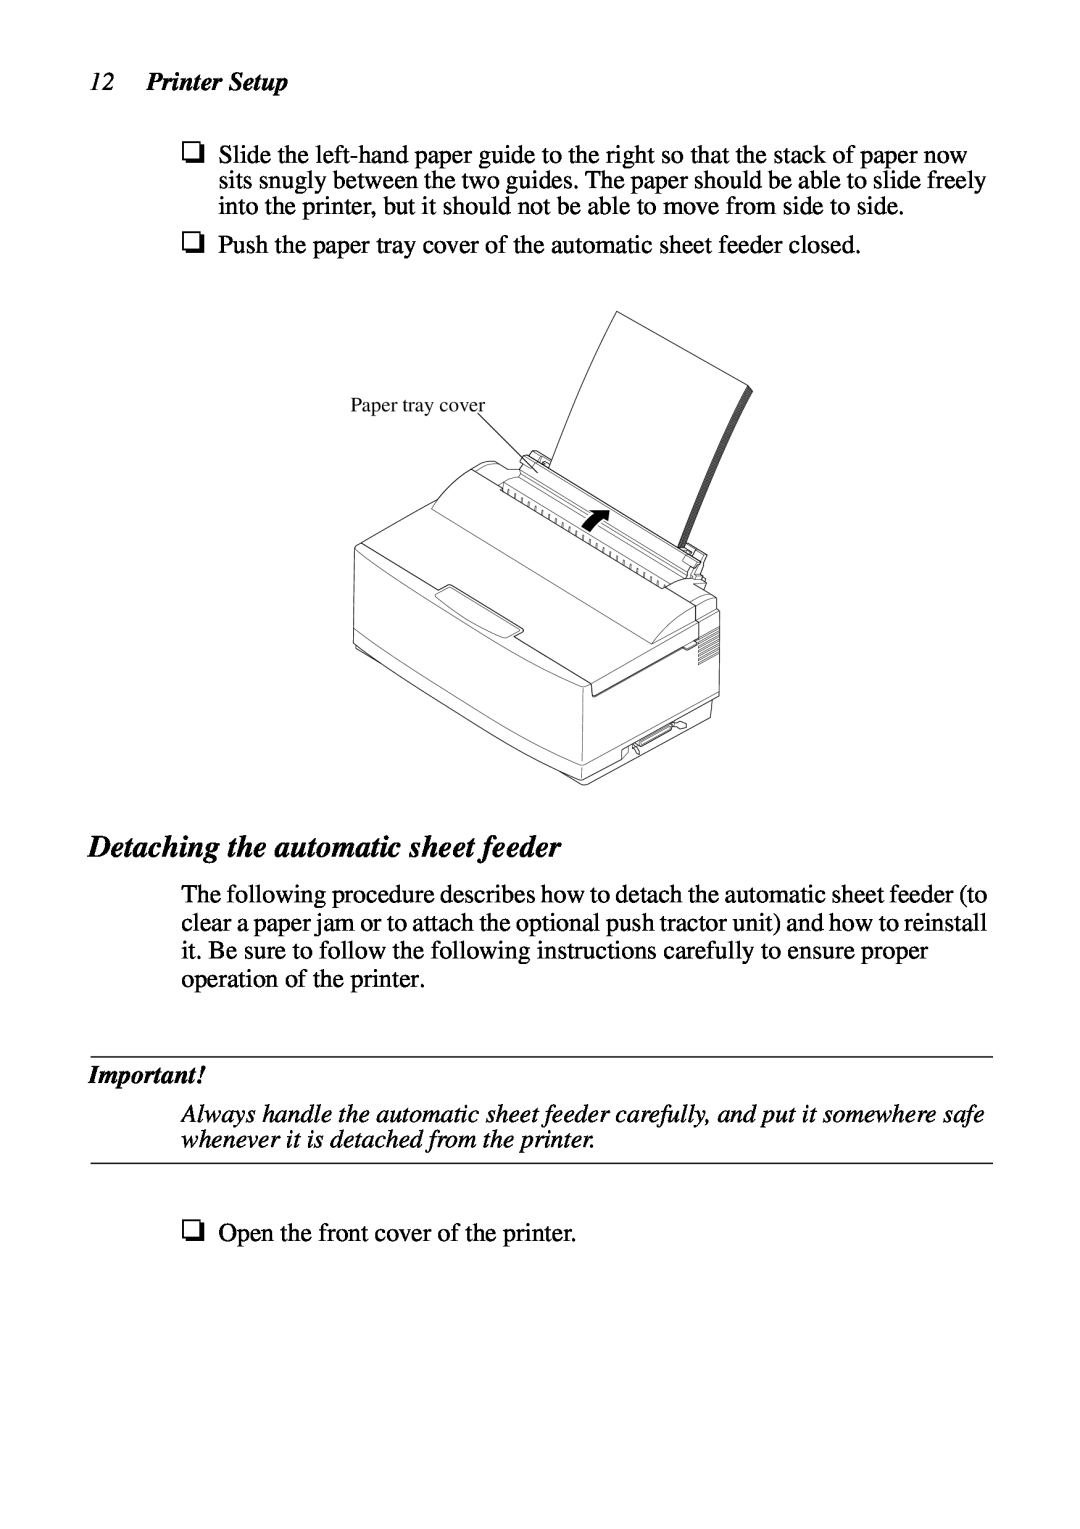 Star Micronics LC-90 NX-1010 user manual Detaching the automatic sheet feeder, Printer Setup 